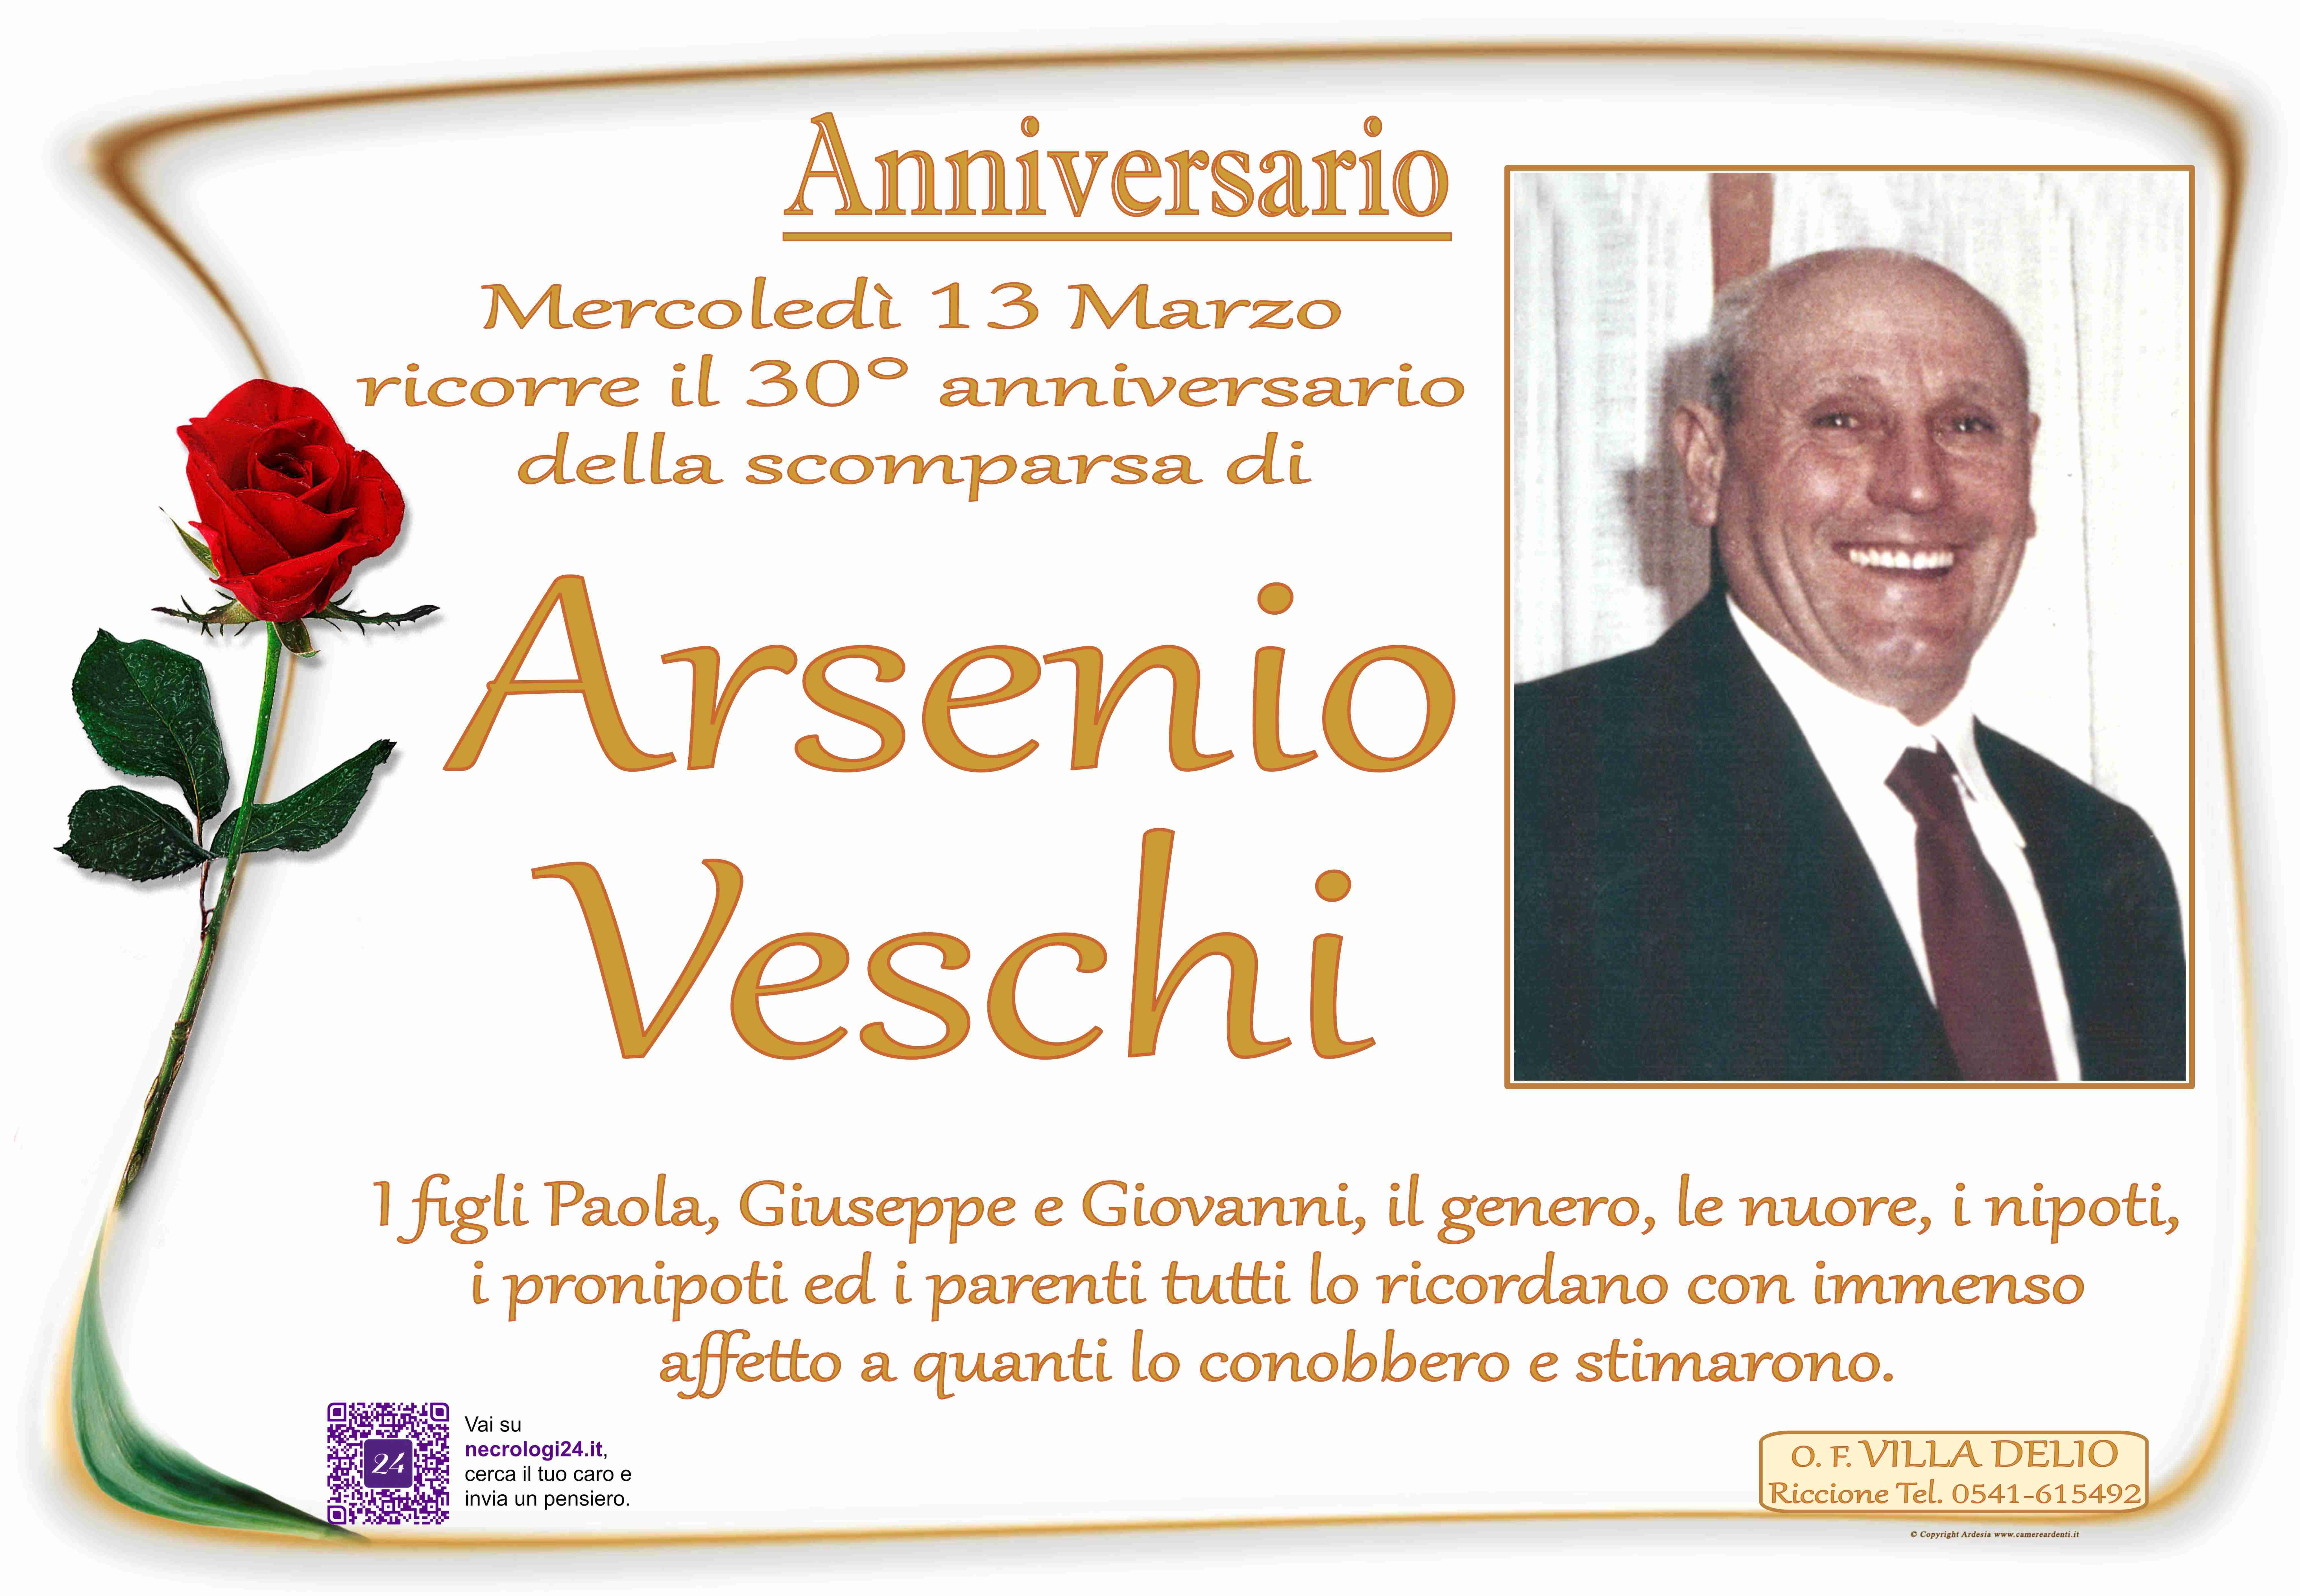 Arsenio Veschi